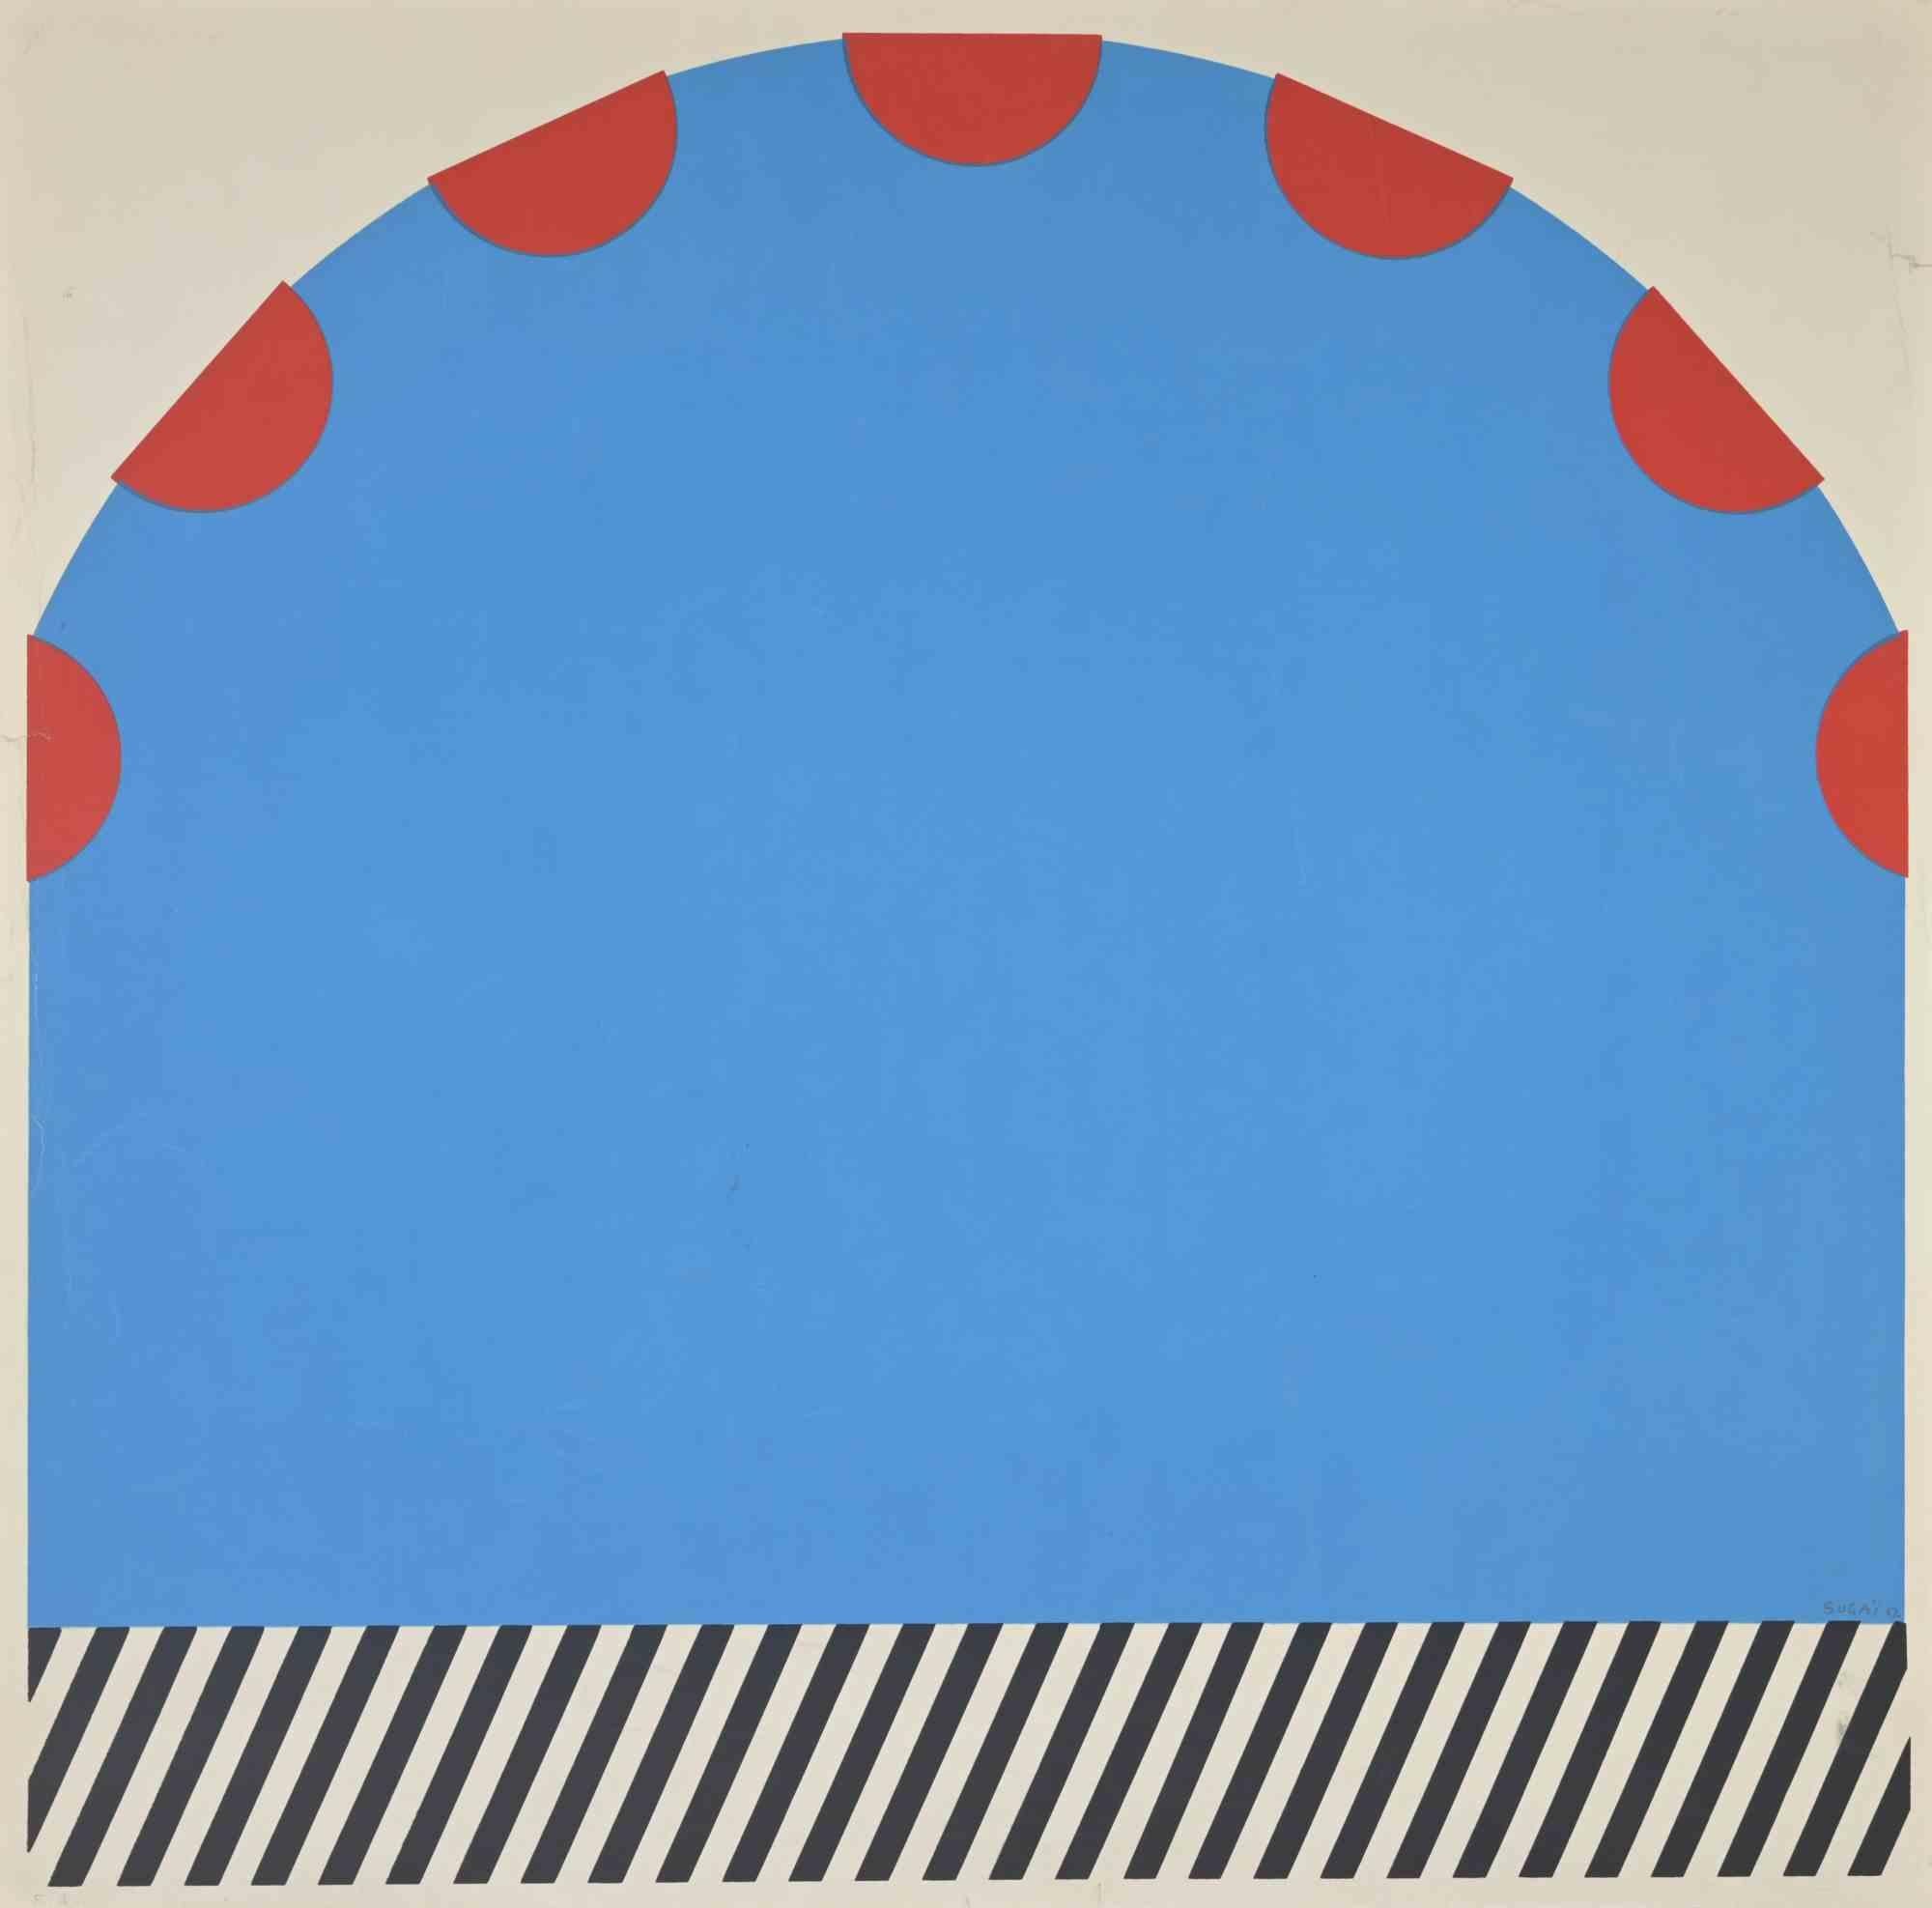 Abstract Print Kumi Sugai - Composition abstraite - Lithographie de Kumi Sugaï - 1960